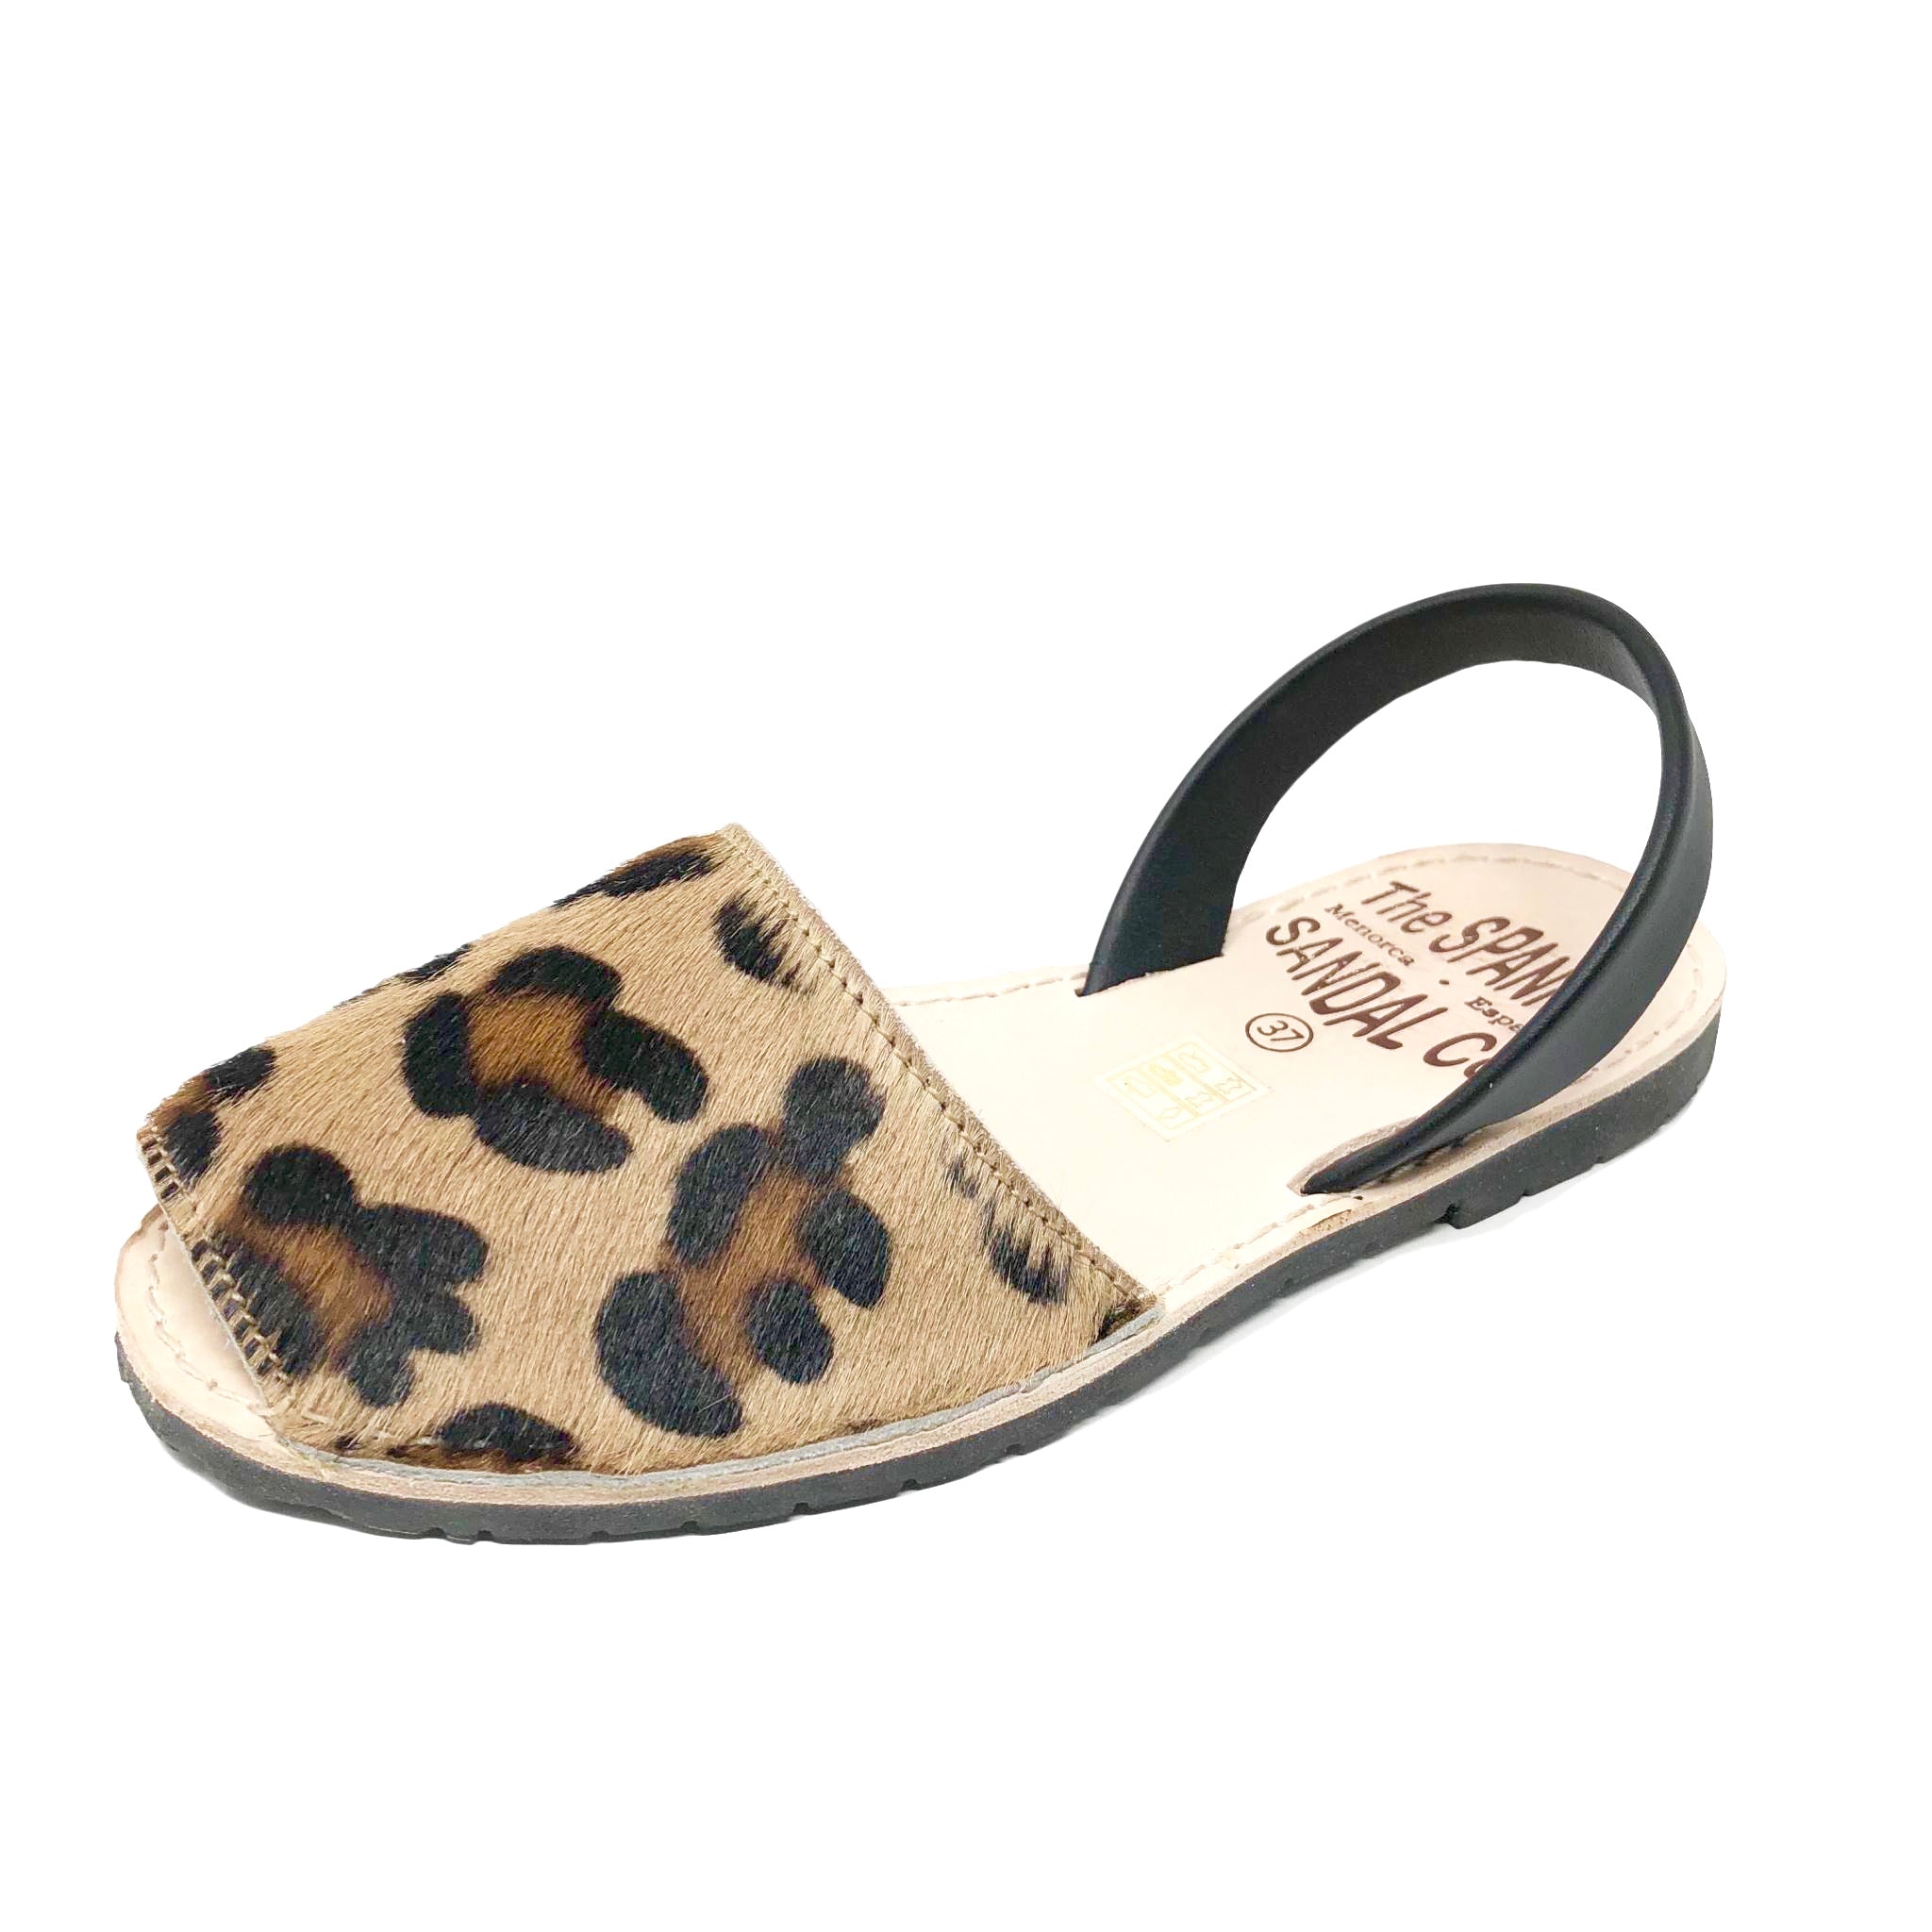 Classic Leopard Print sandals